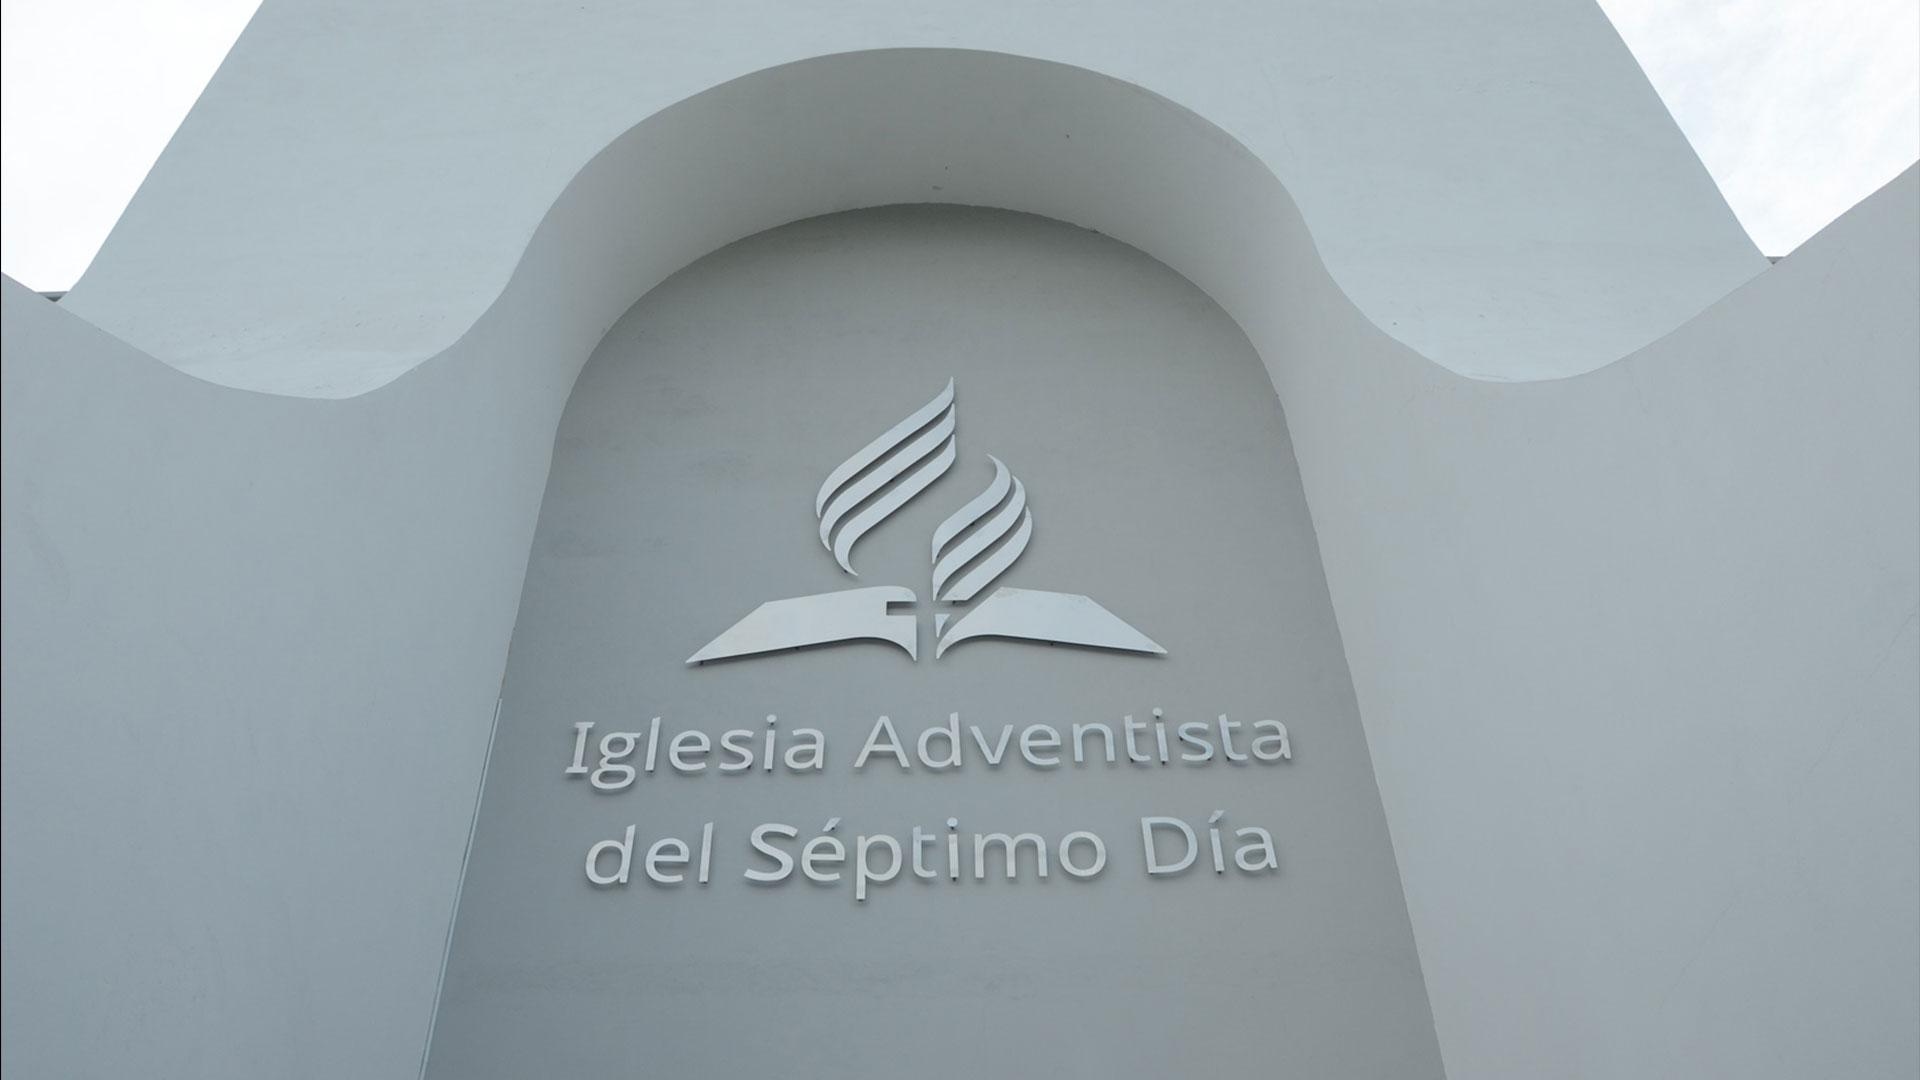 Adopta Iglesia Universitaria nuevo sistema adventista de identidad